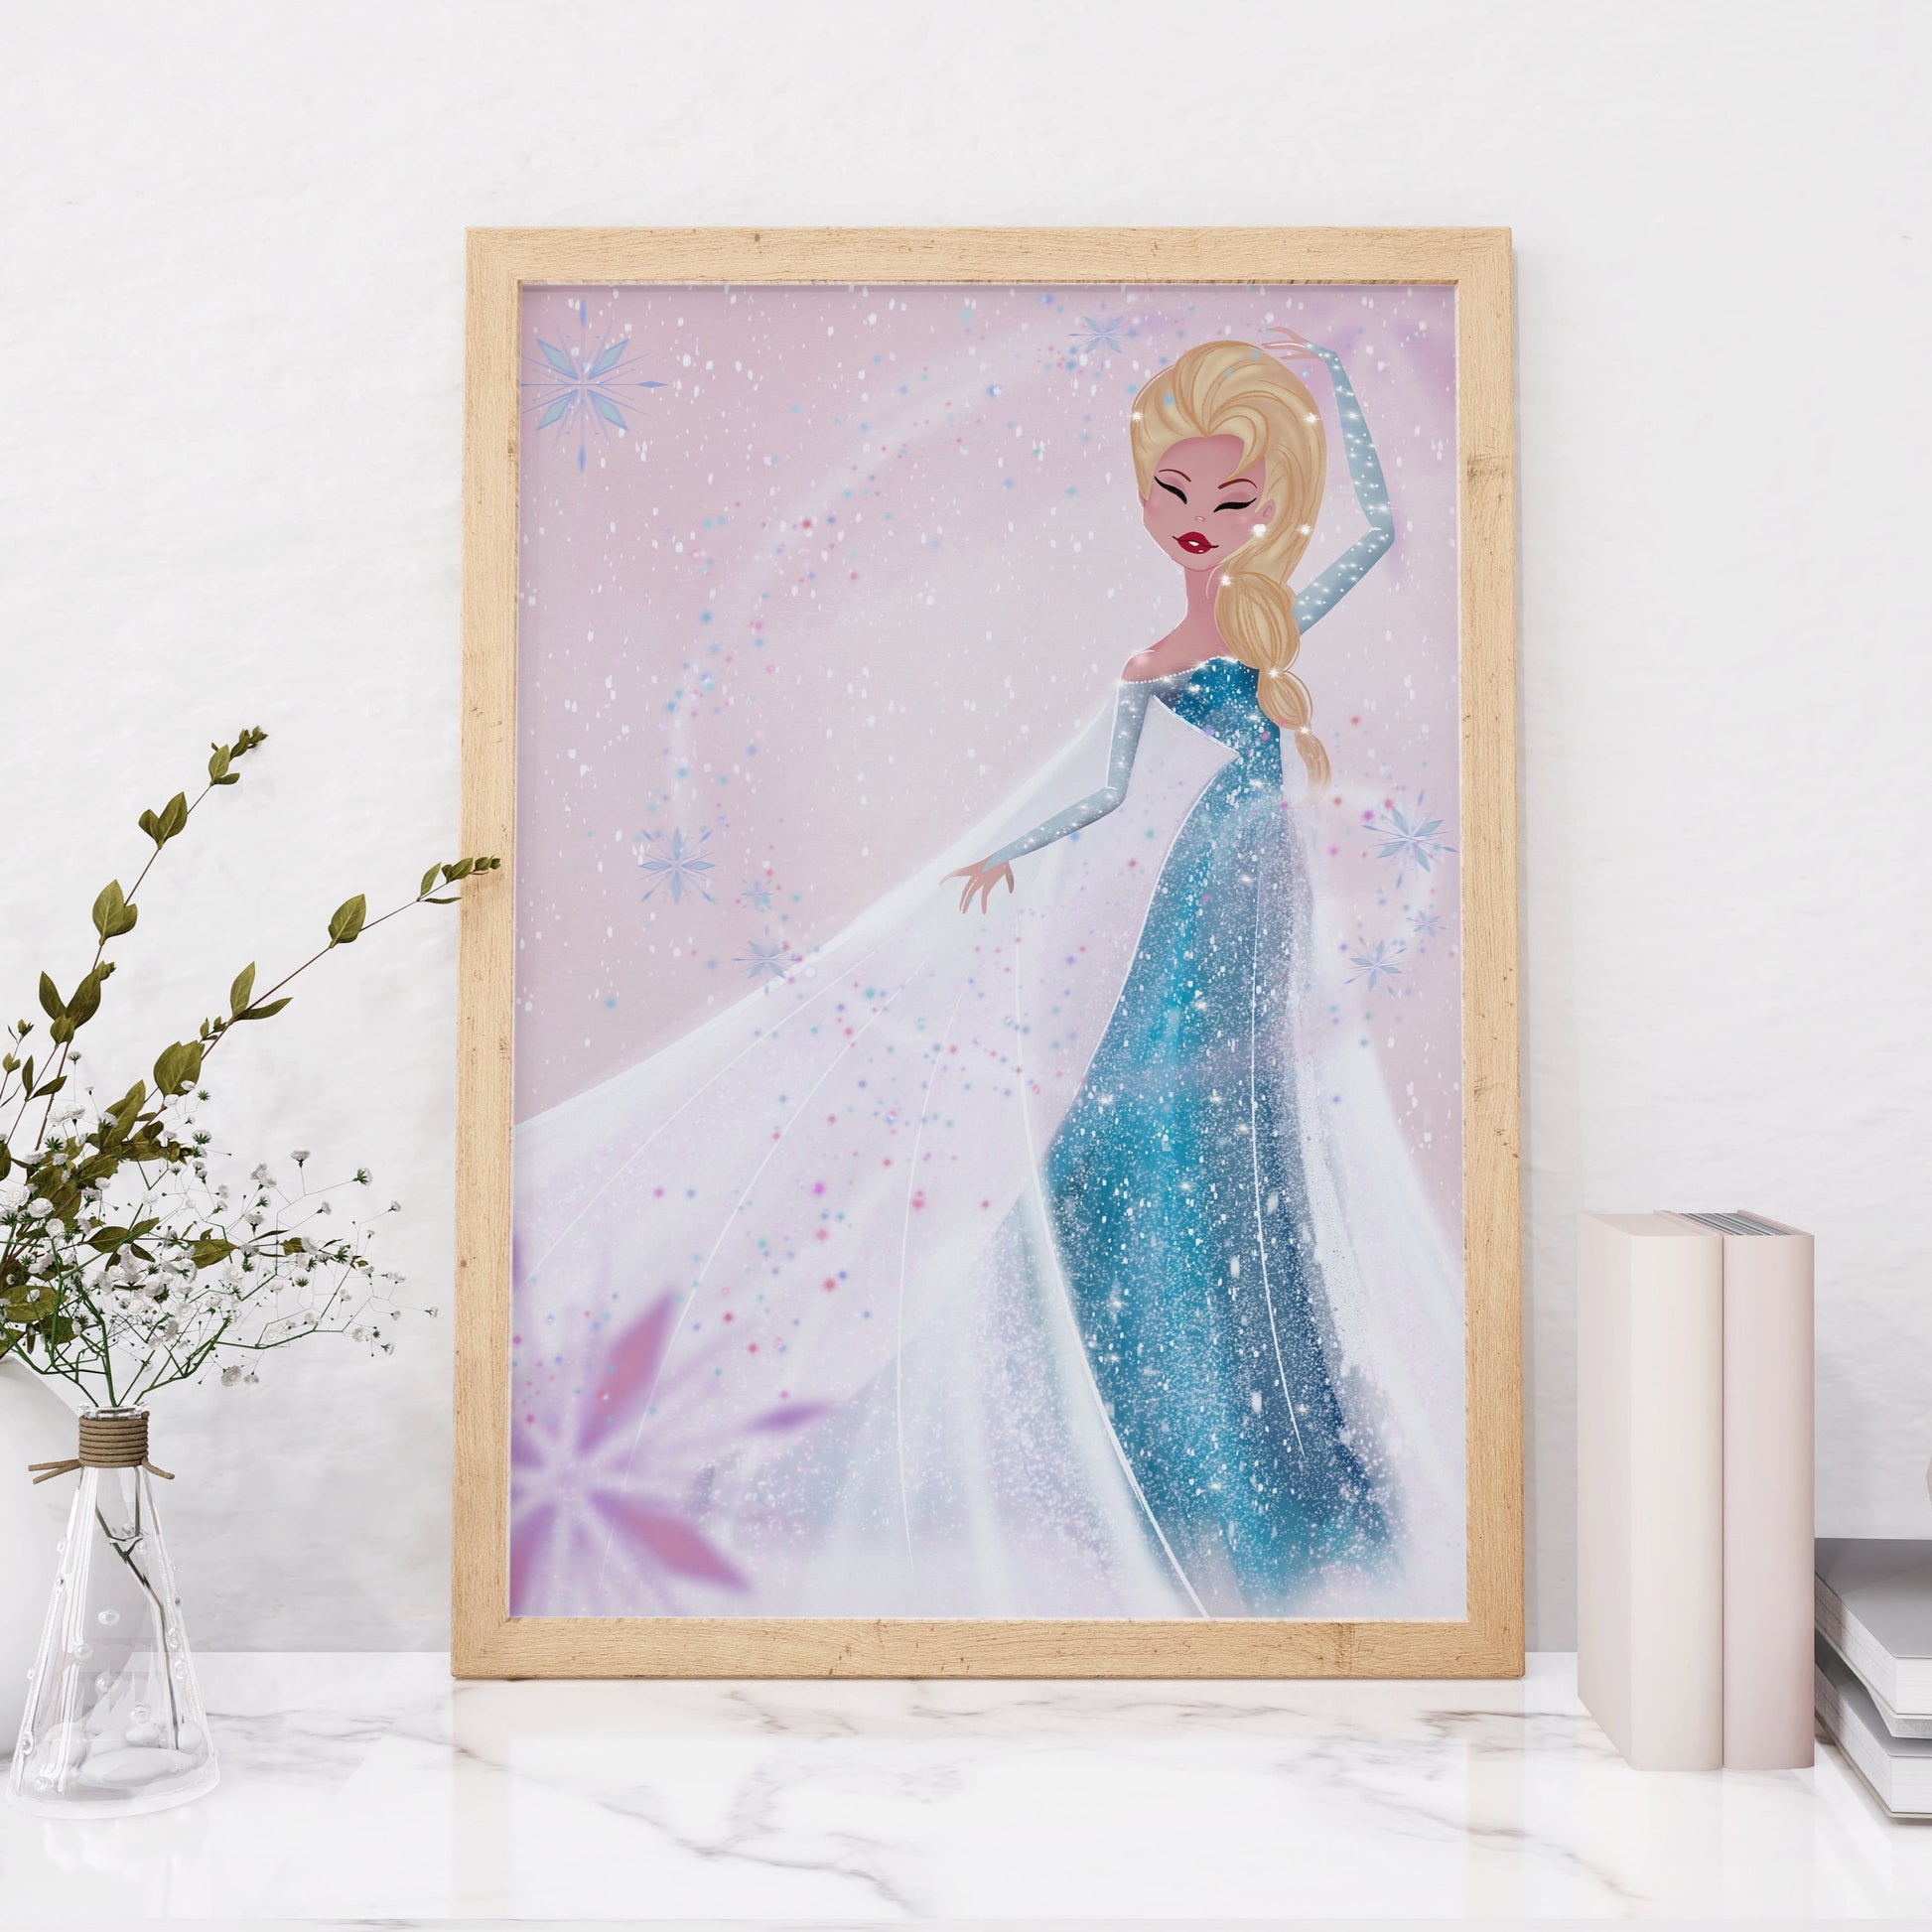 Disney FROZEN Wall Decal - Princess Elsa of Arendelle